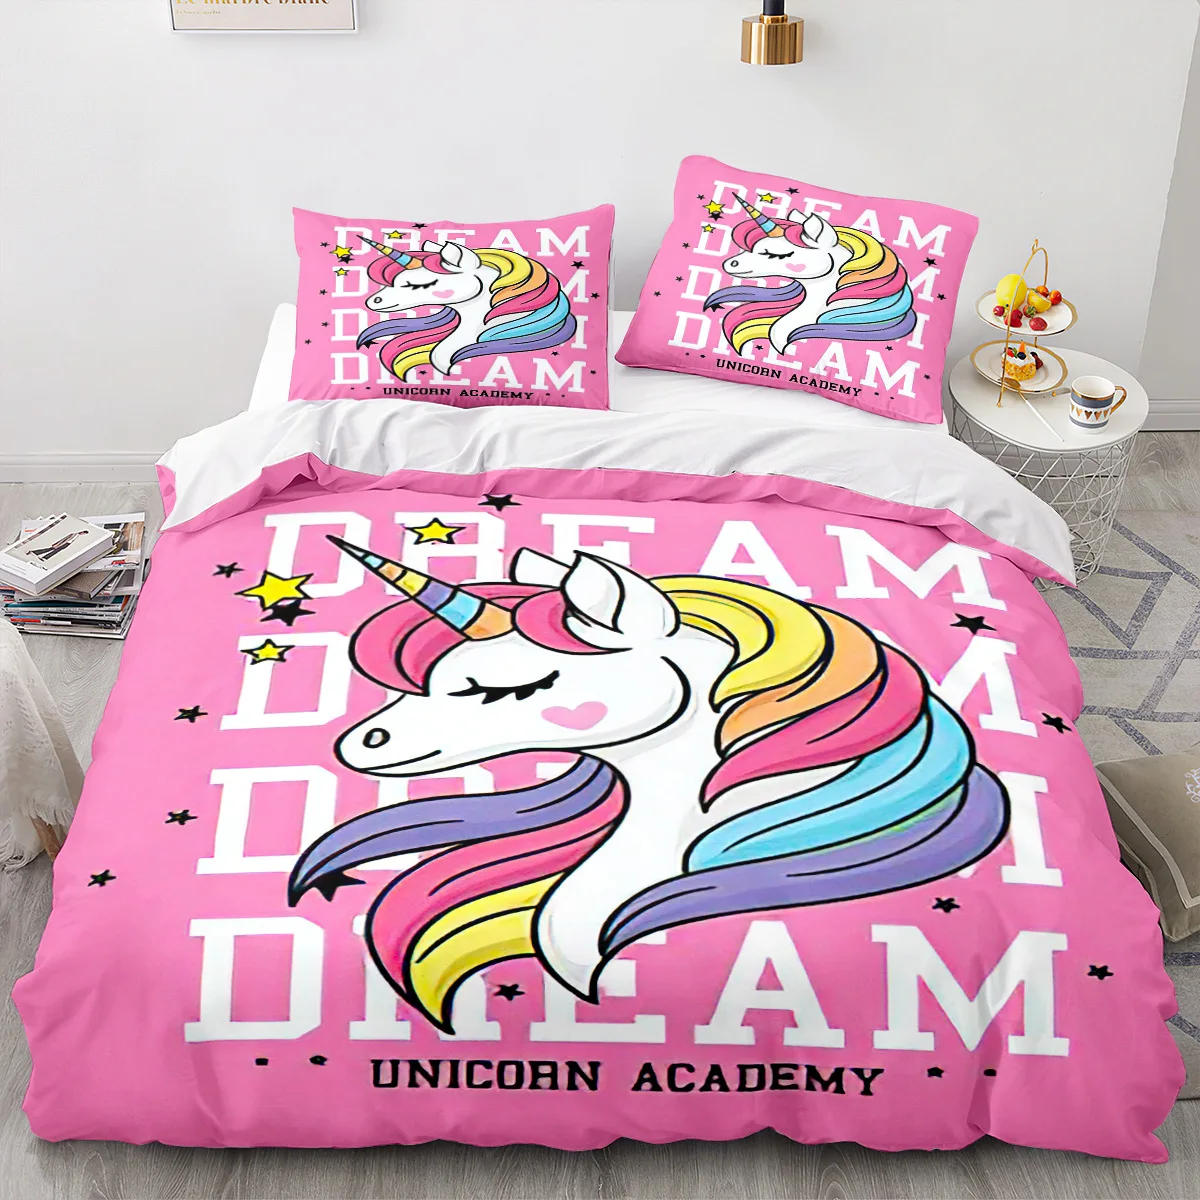 

Cute Romantic Theme for Kids Girls Polyester Comforter Cover Unicorn Duvet Cover Set Cartoon Galaxy Rainbow Colourful Unicorn